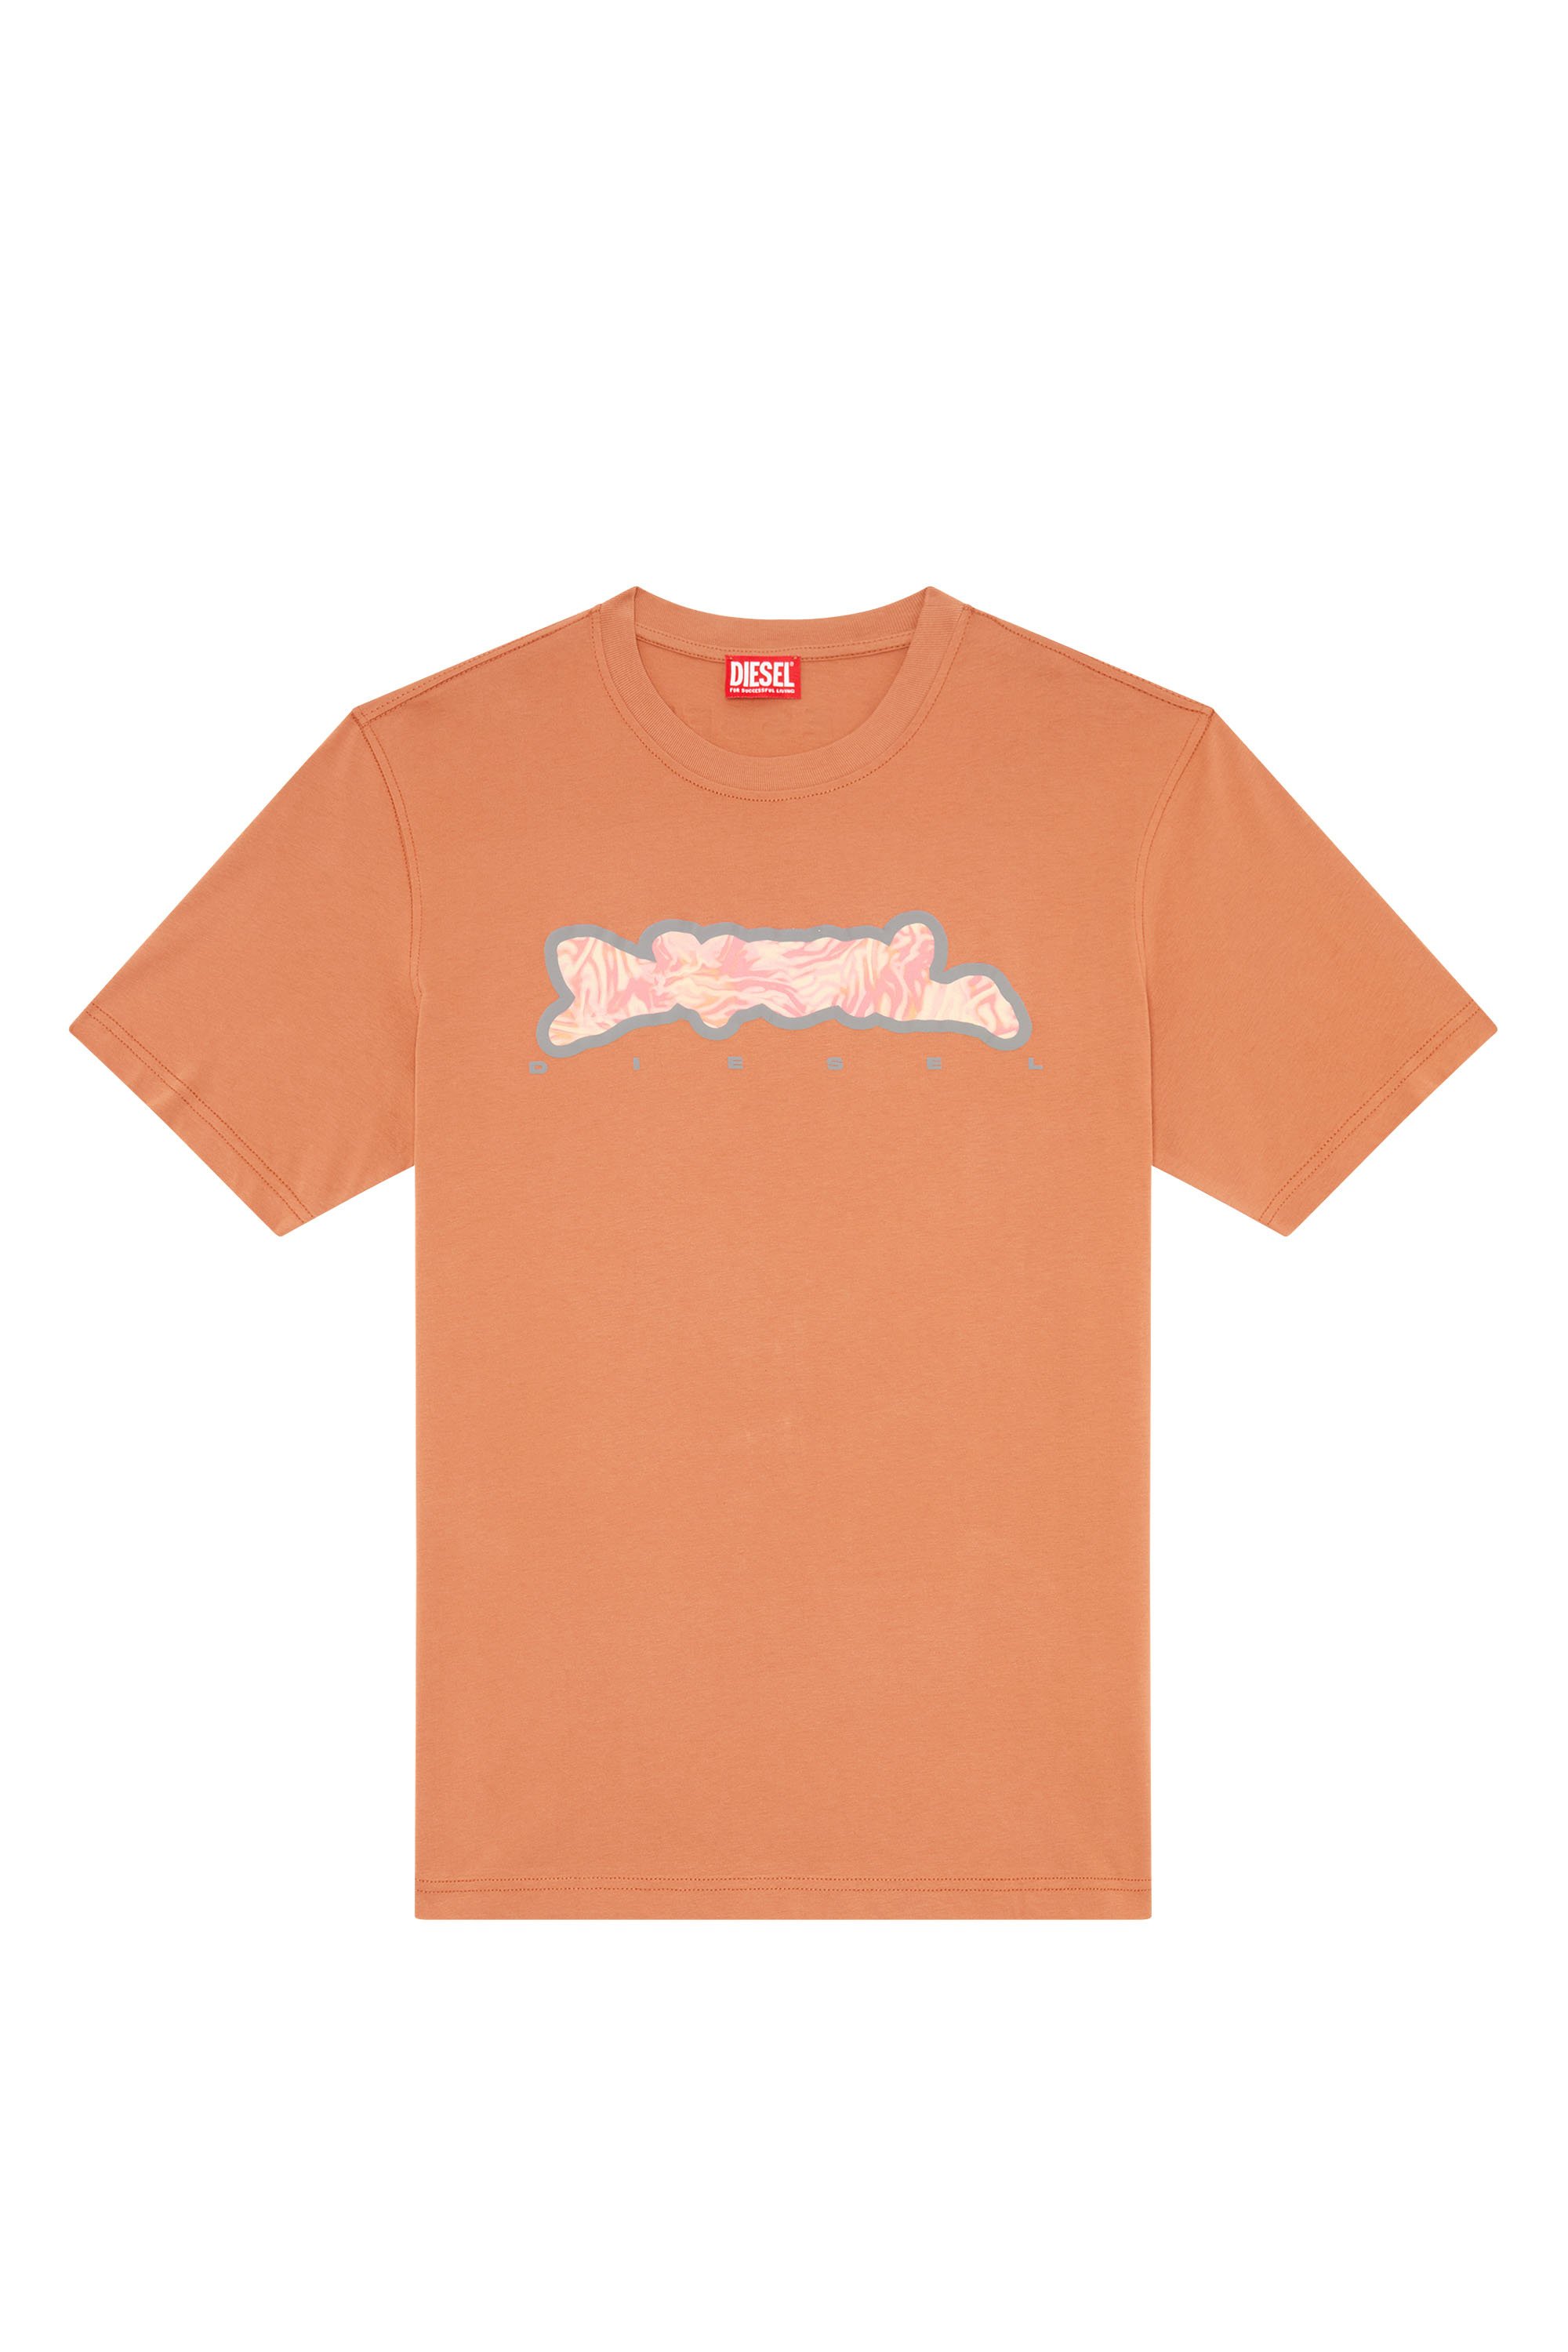 Diesel - T-JUST-N16, Homme T-shirt avec motif camouflage zébré in Orange - Image 2